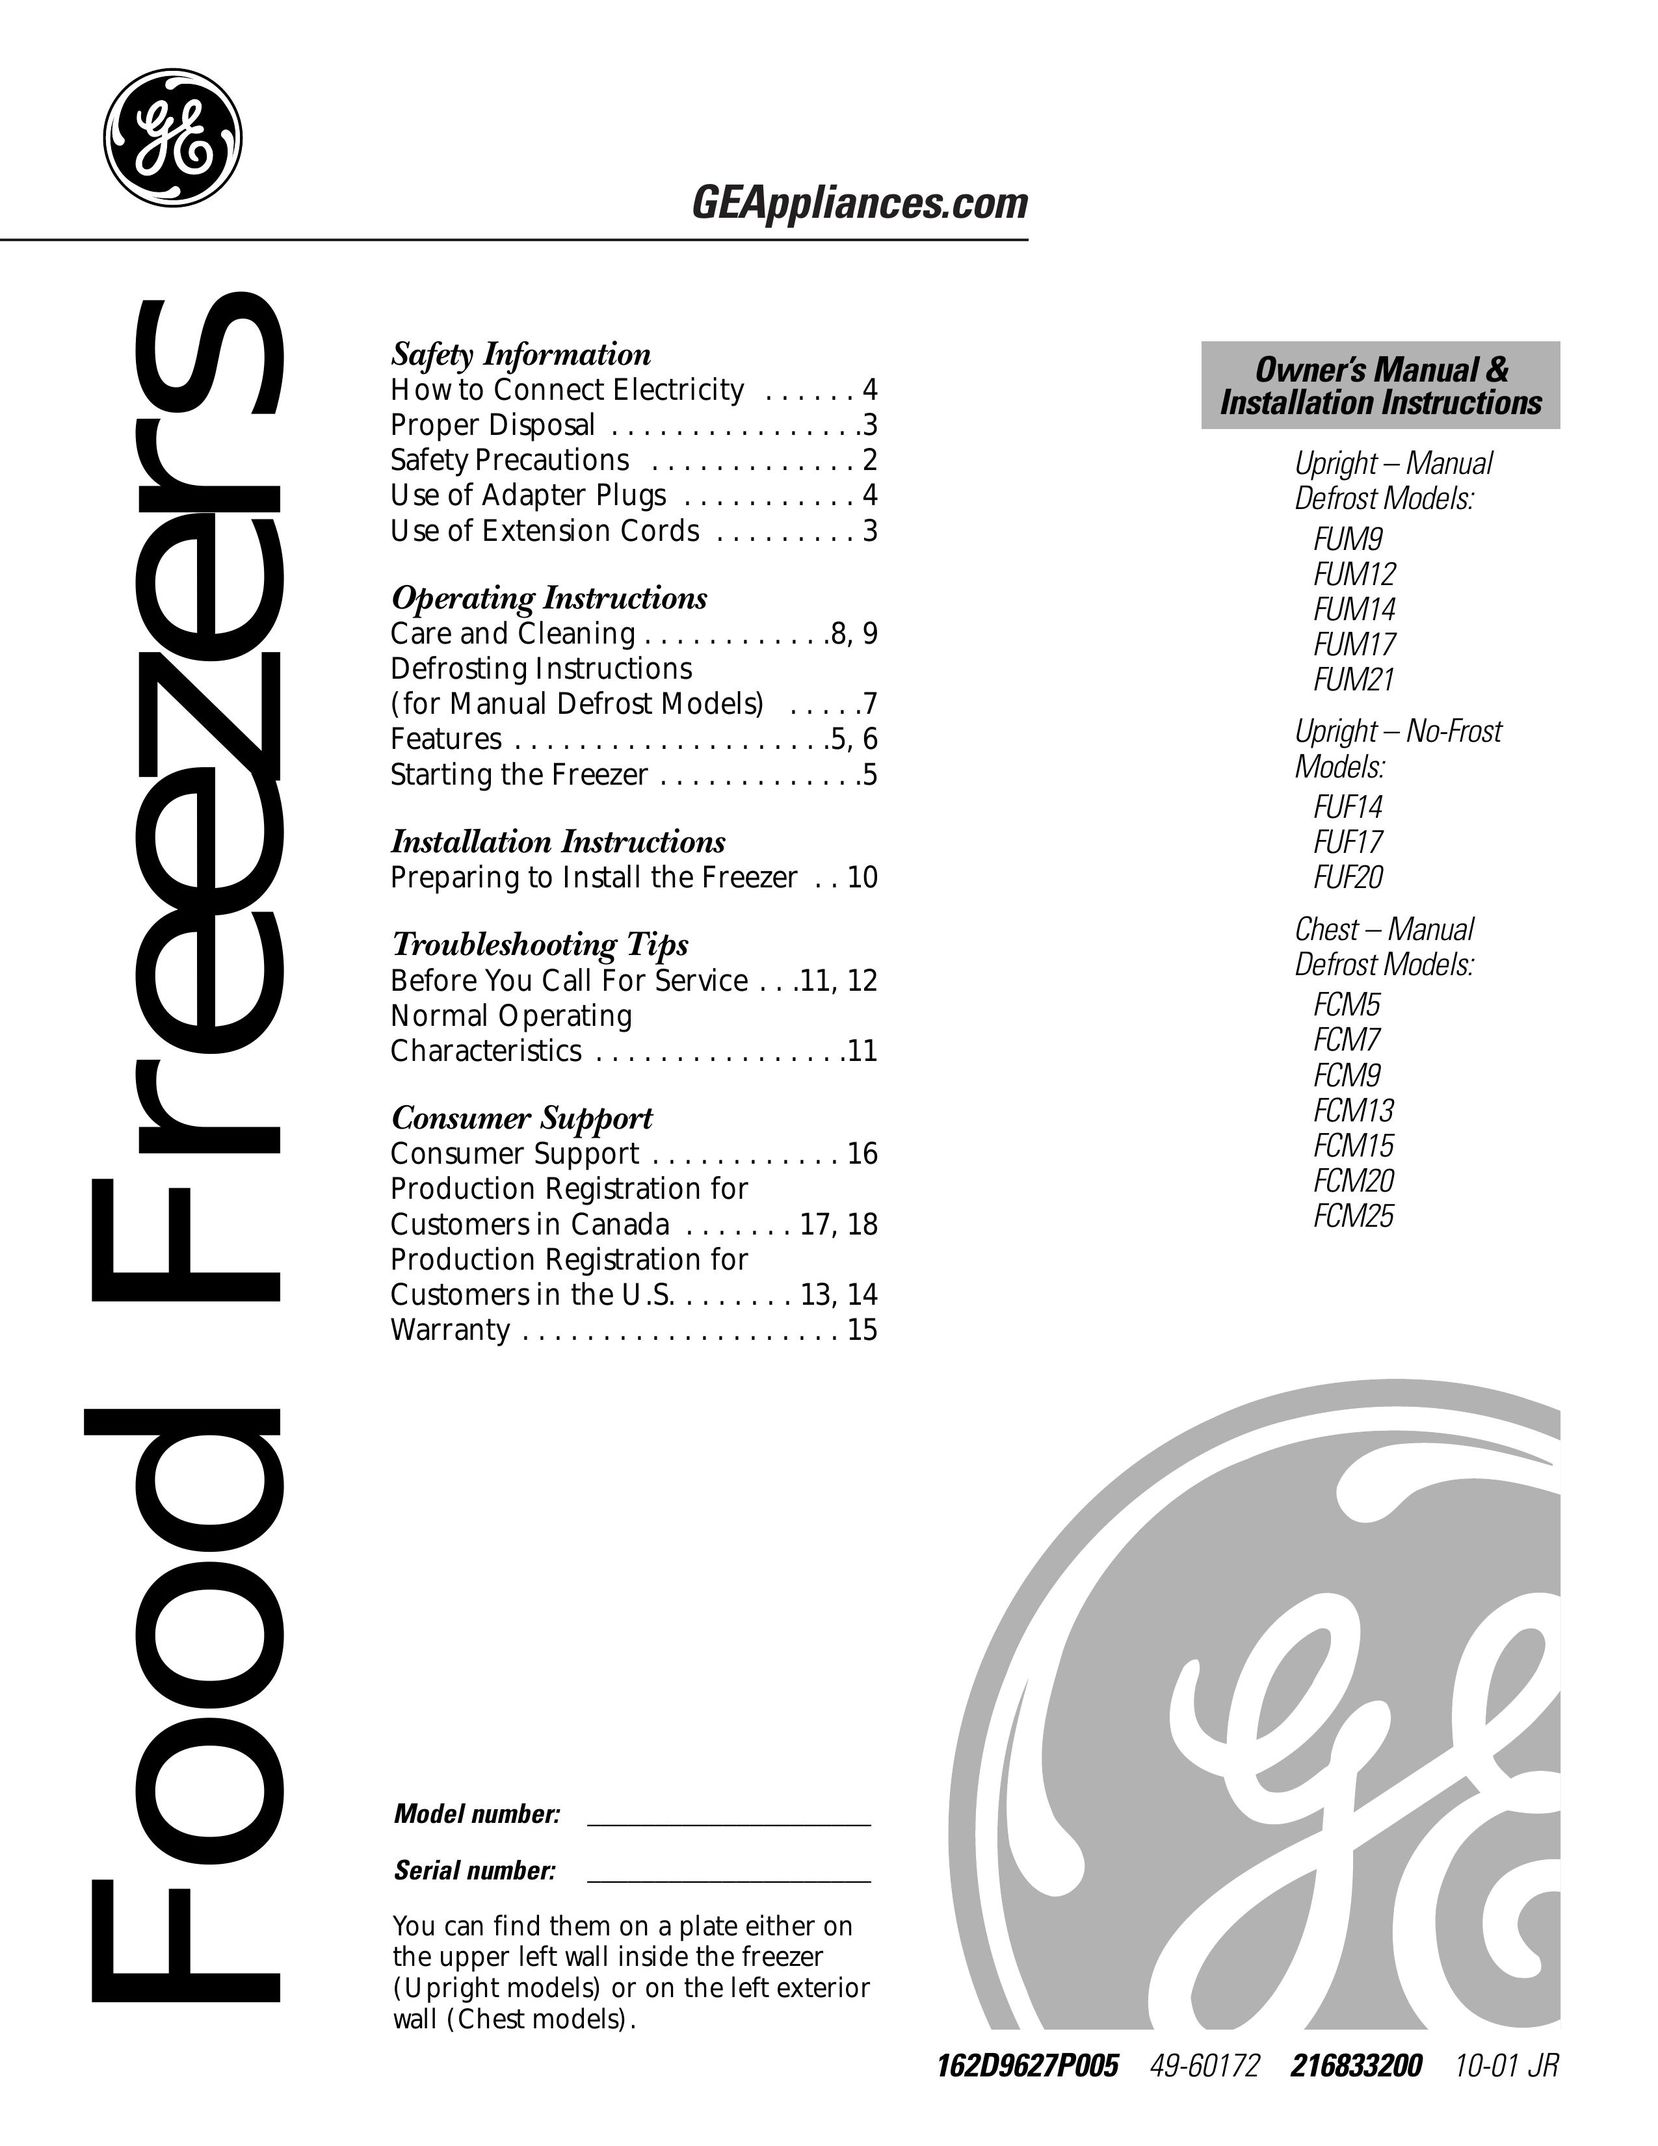 GE FCM15 Freezer User Manual